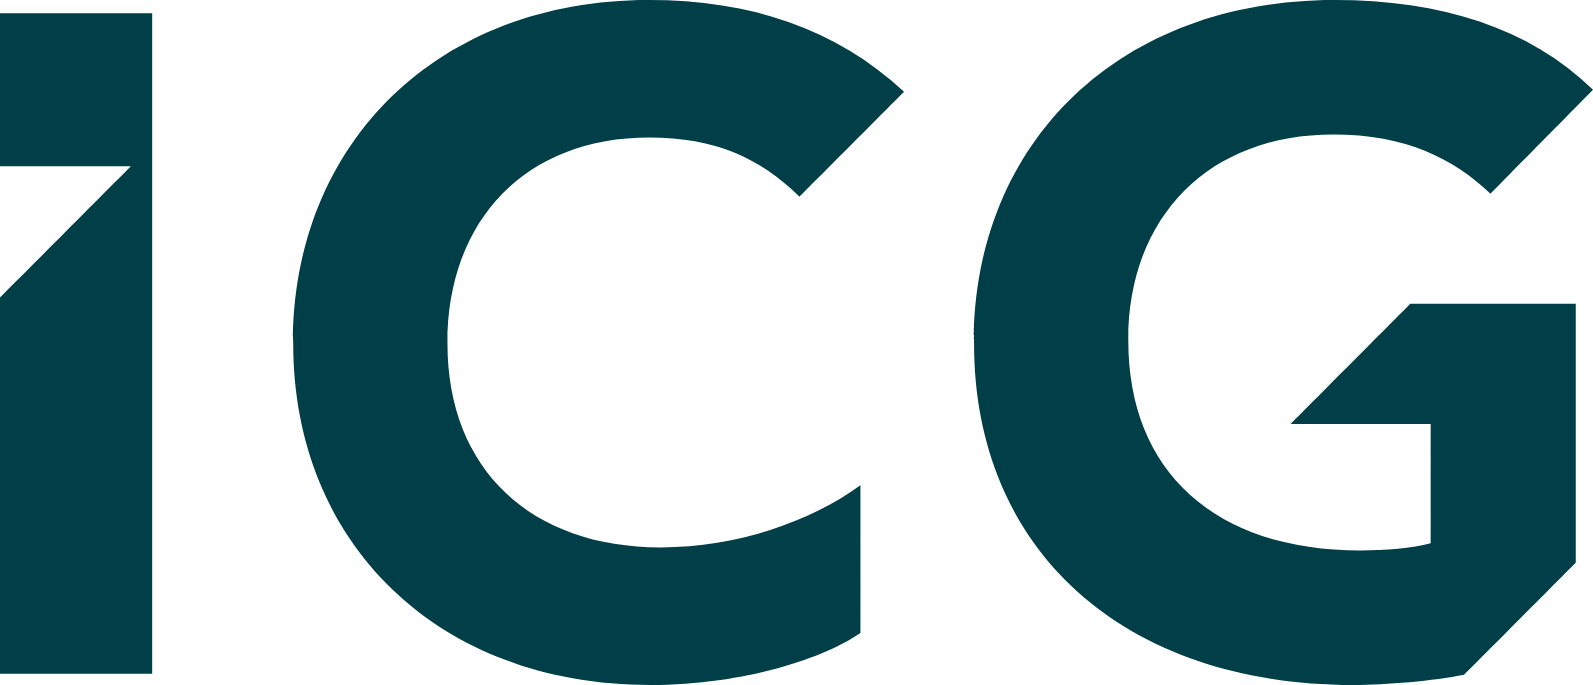 Intermediate Capital Group (ICG) logo (transparent PNG)